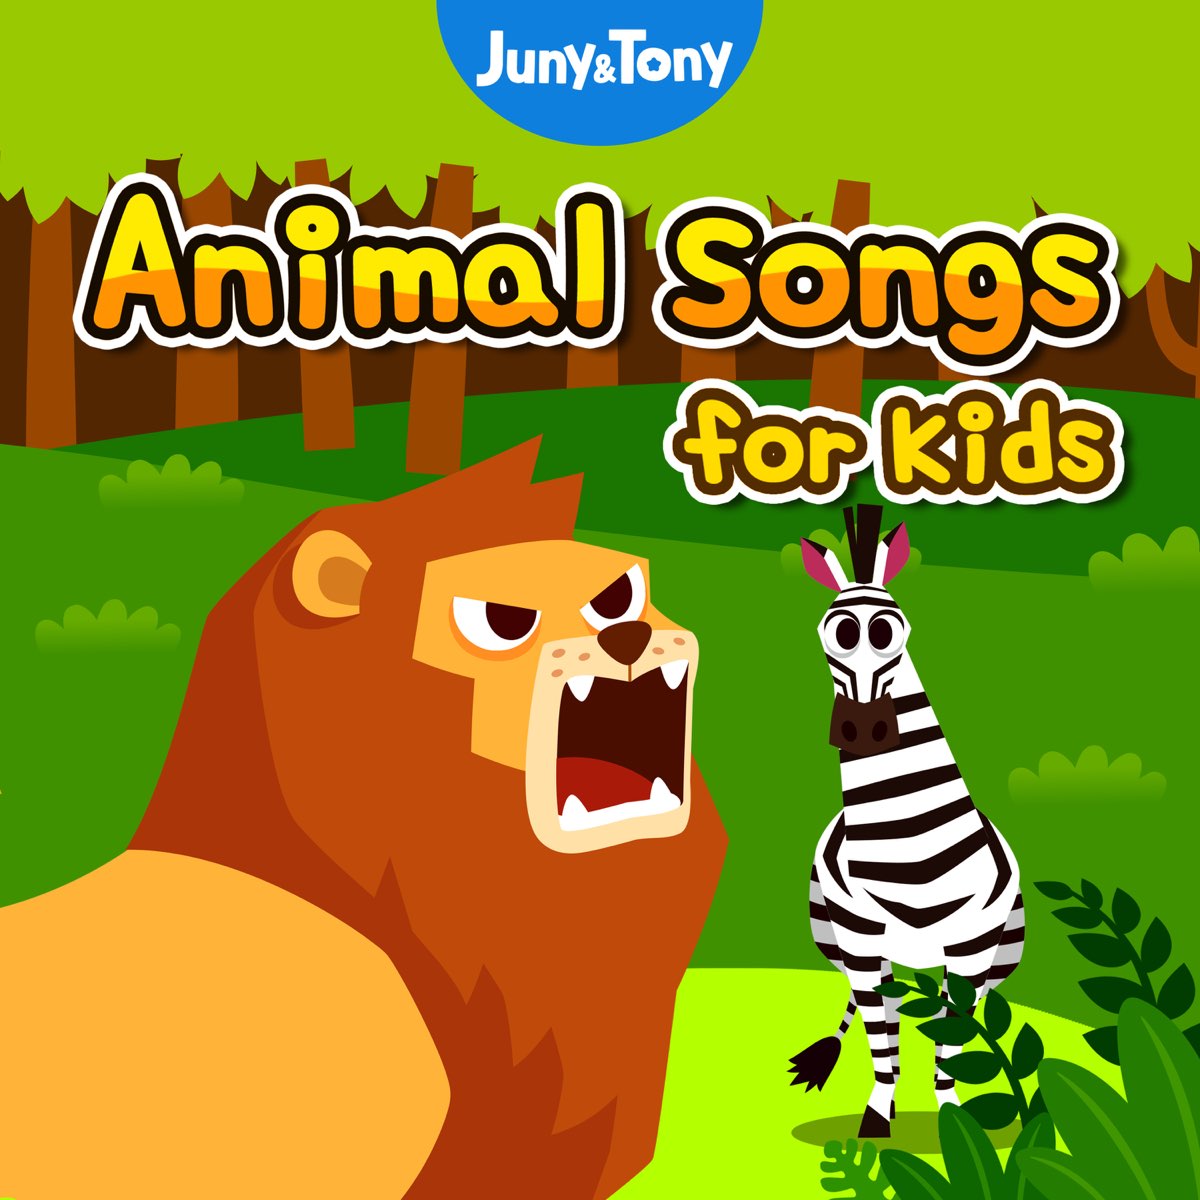 Animal Songs for Kids by JunyTony on Apple Music